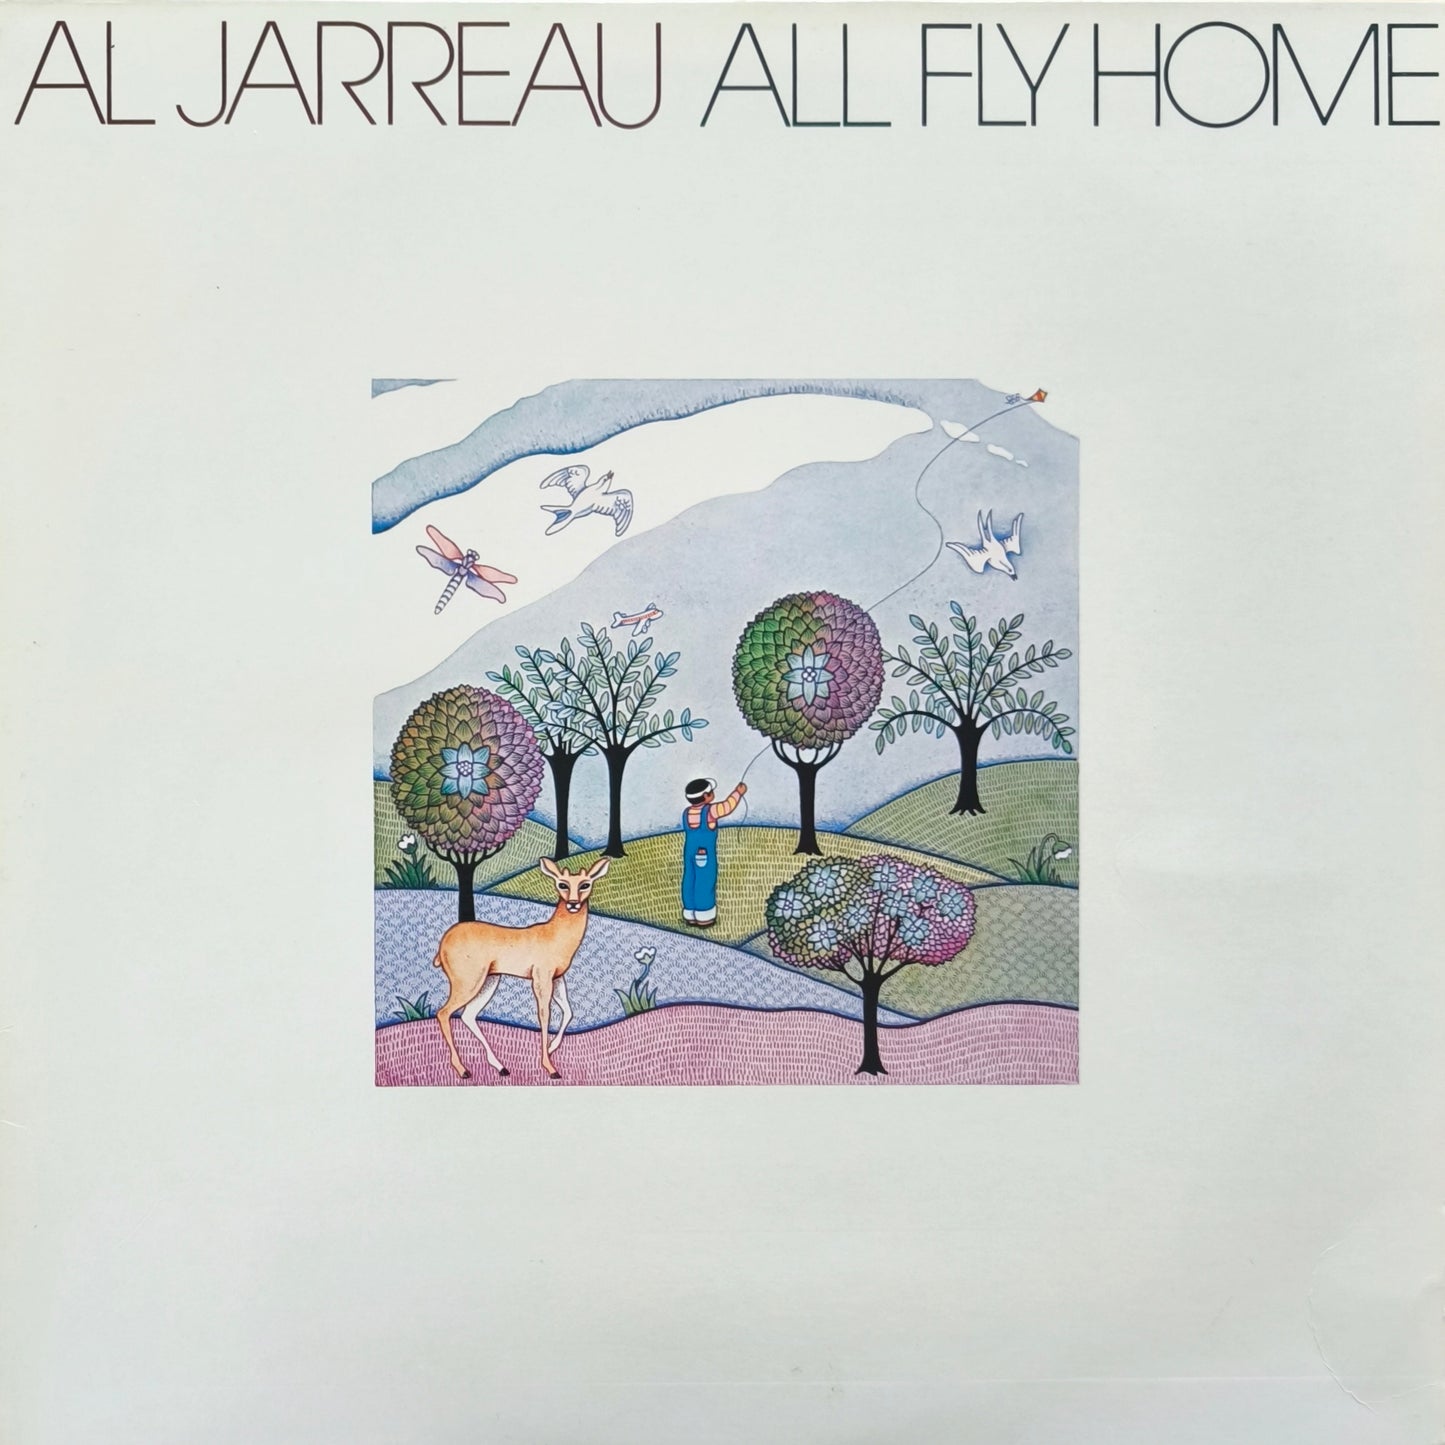 AL JARREAU - All Fly Home